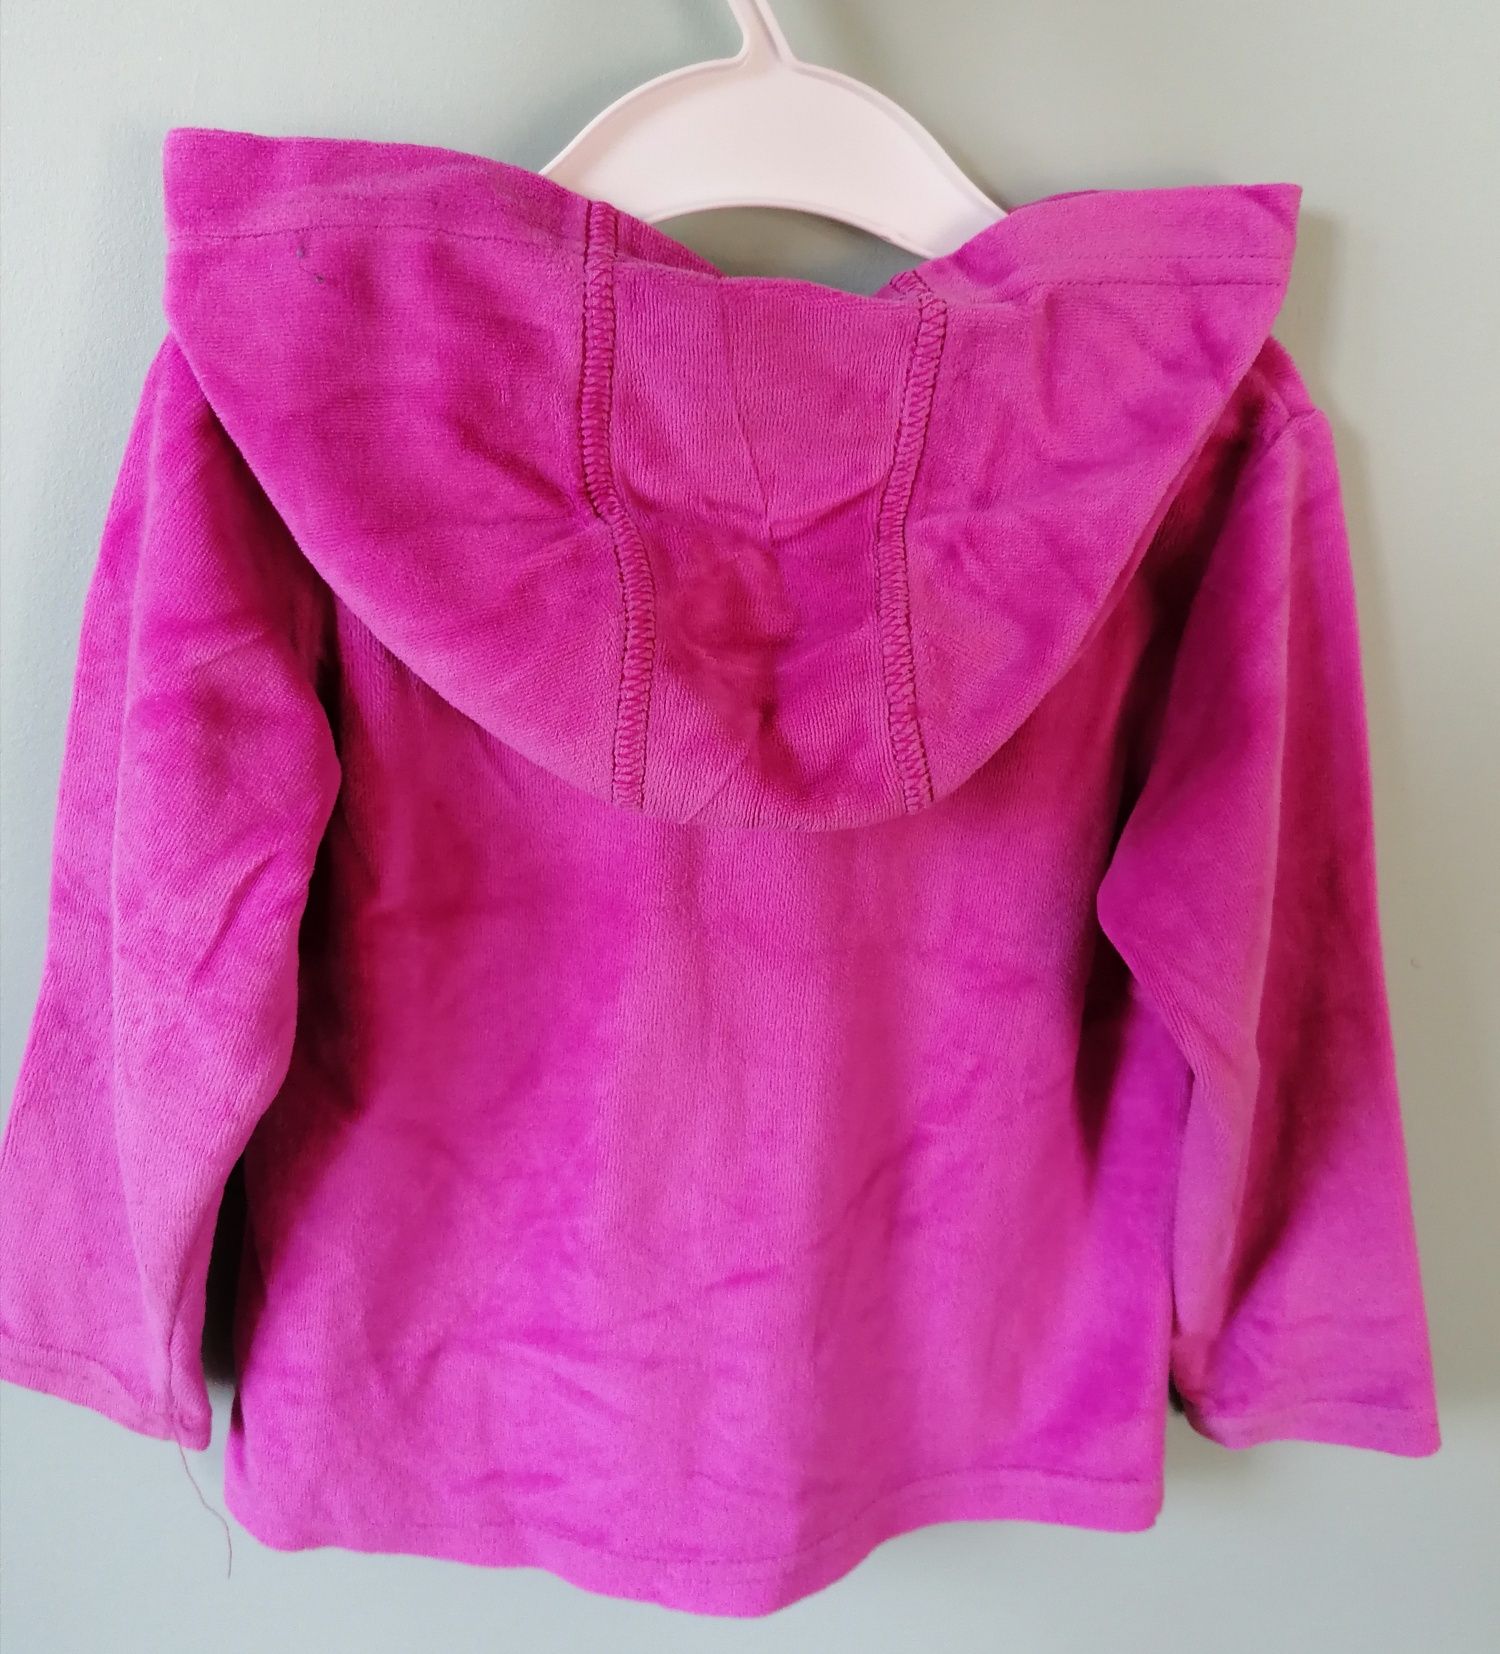 Bluza fioletowa  welurowa roz. 86 /92